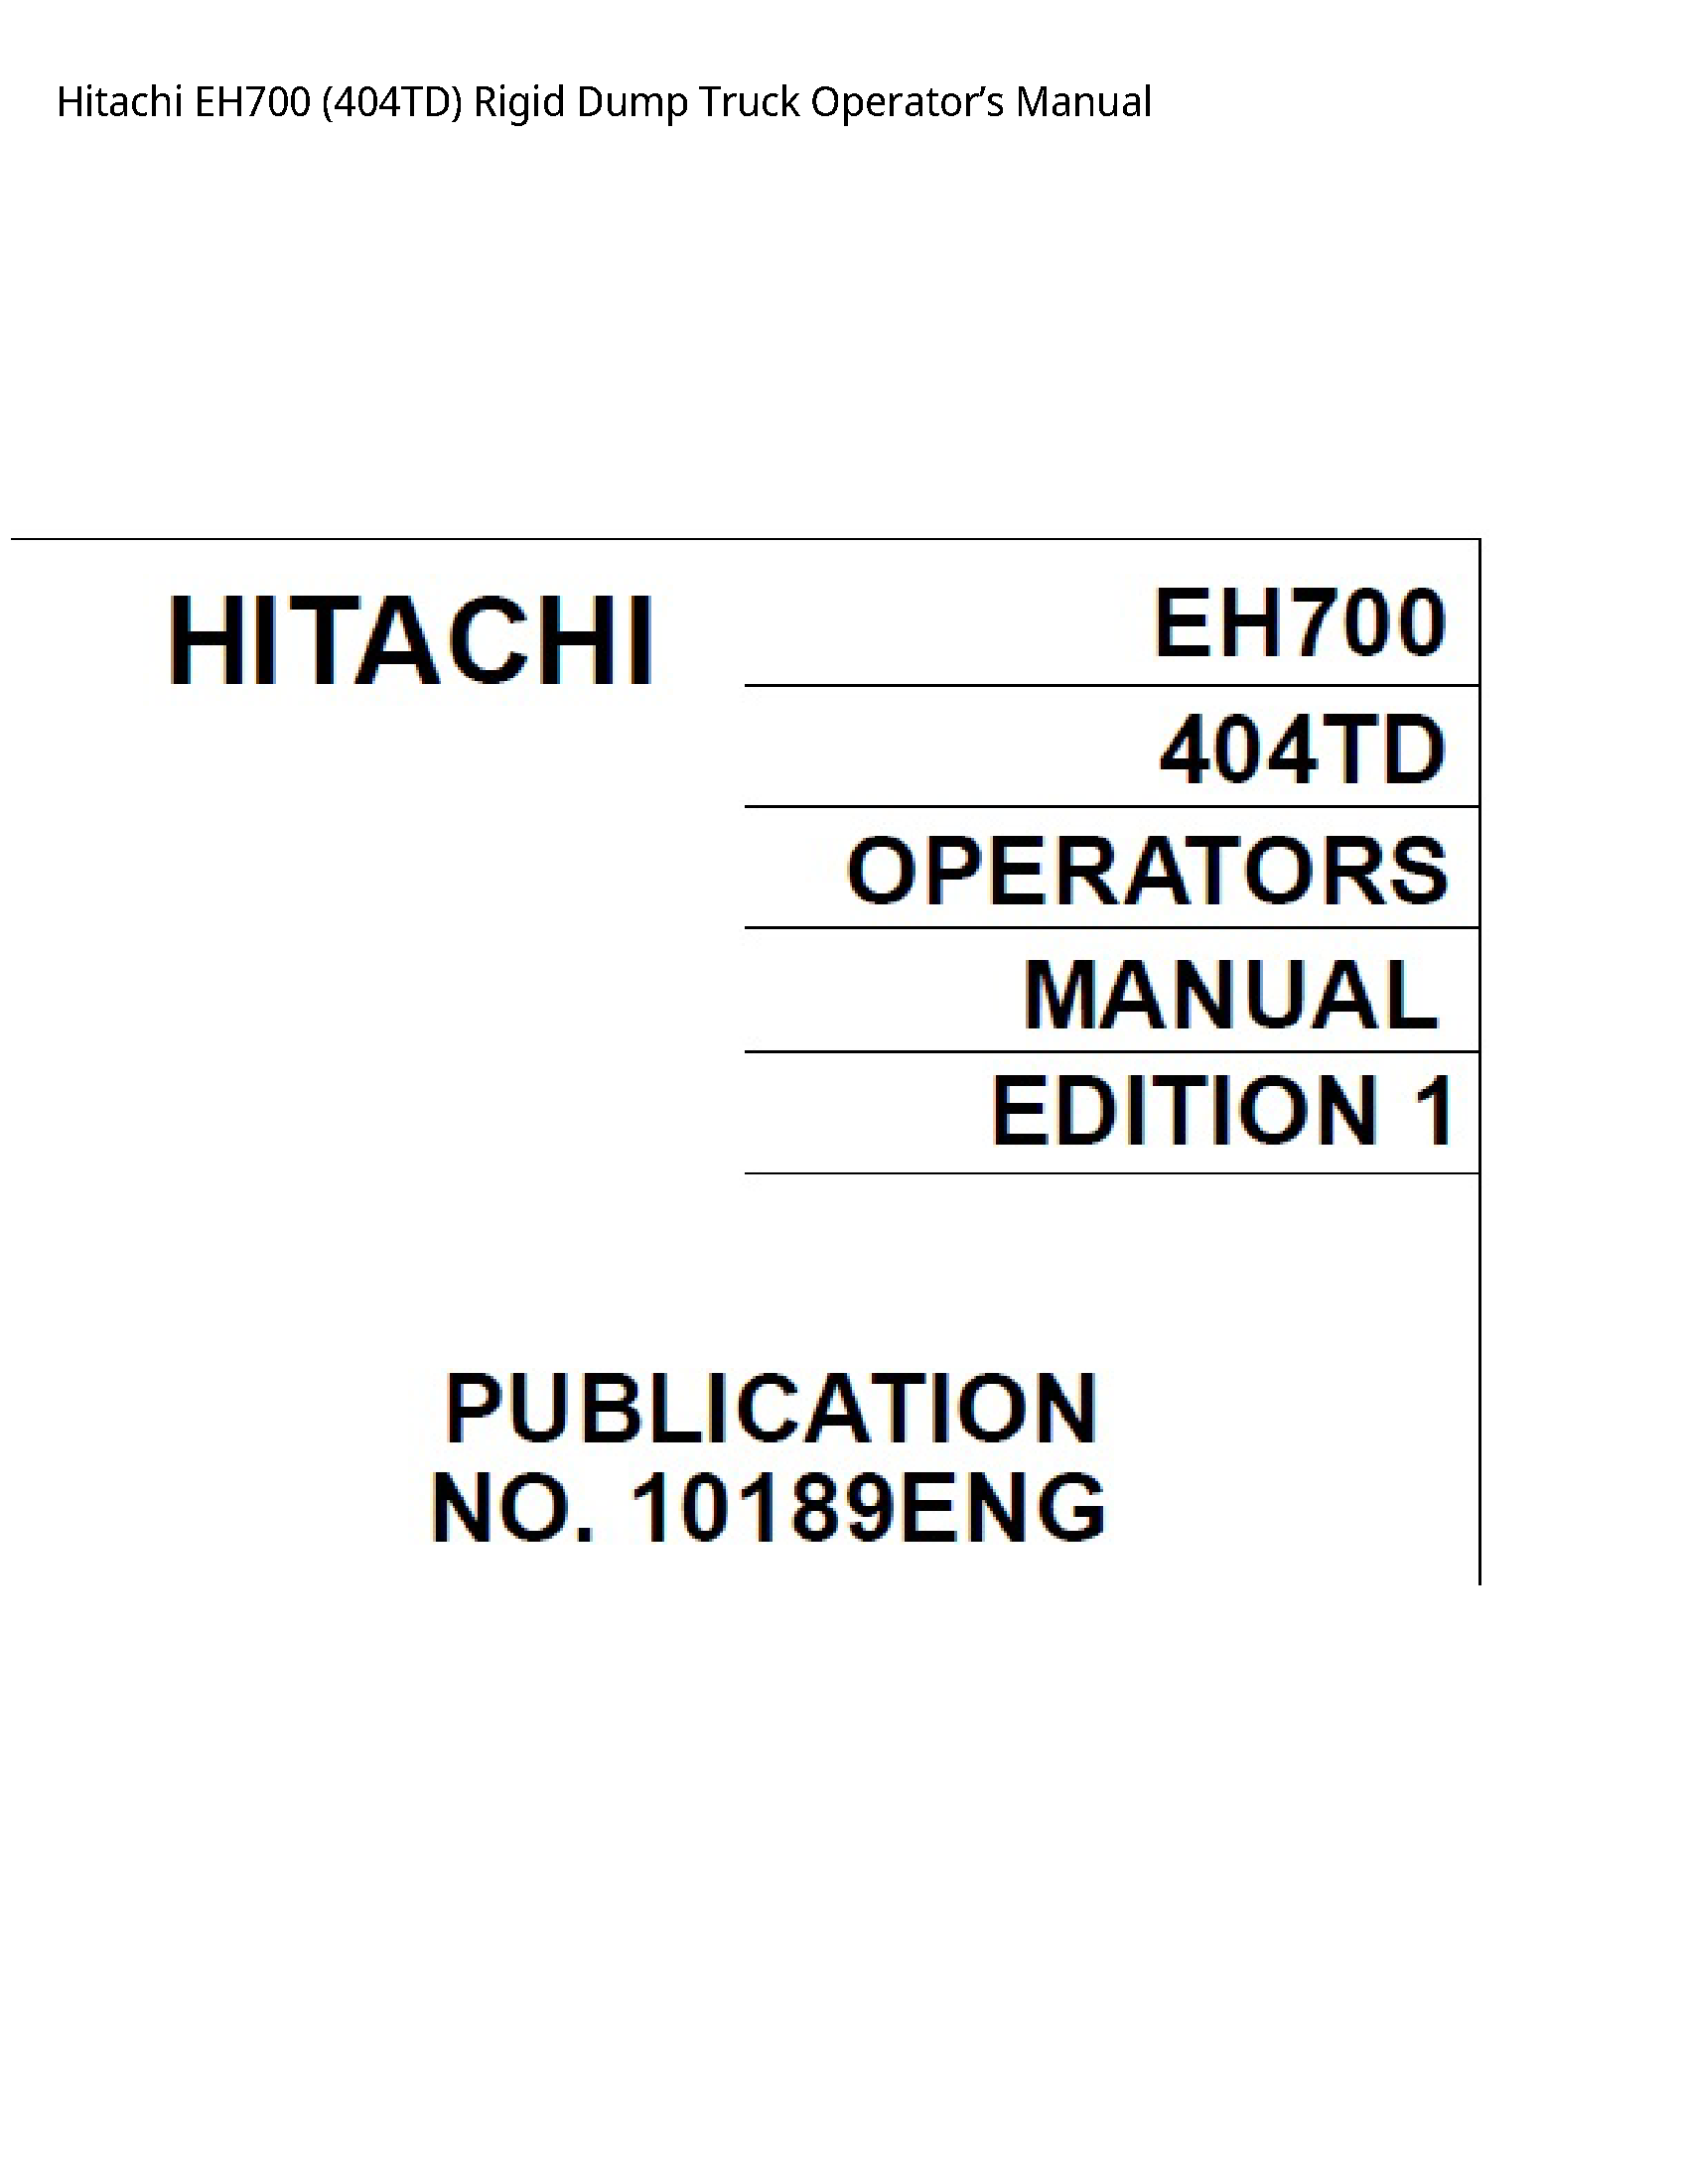 Hitachi EH700 Rigid Dump Truck Operator’s manual